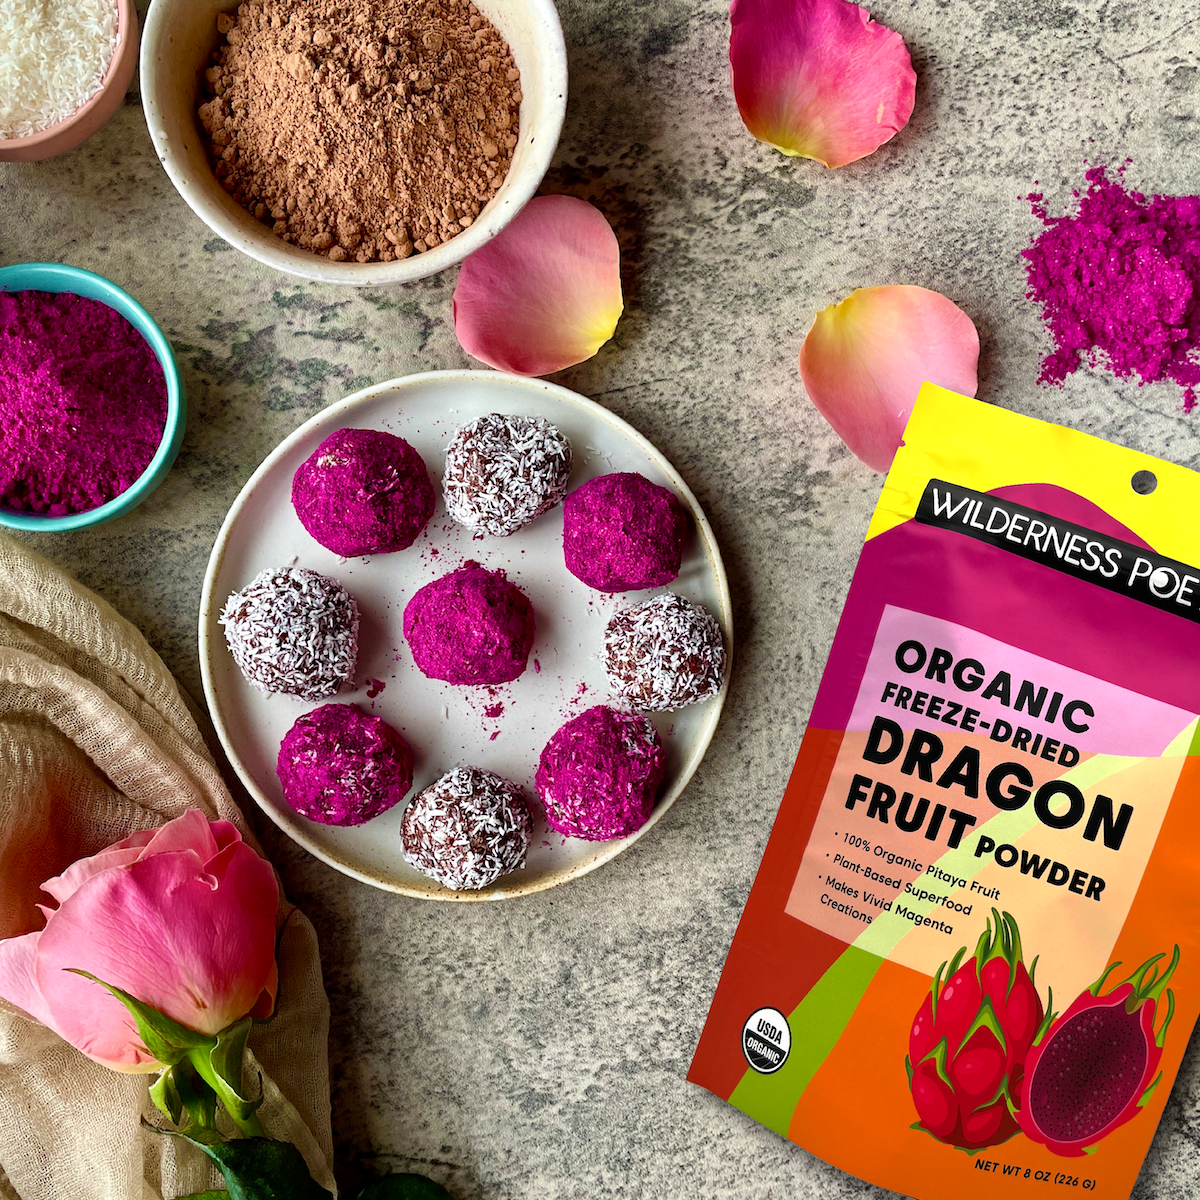 Dragon Fruit Powder - Freeze Dried, Organic